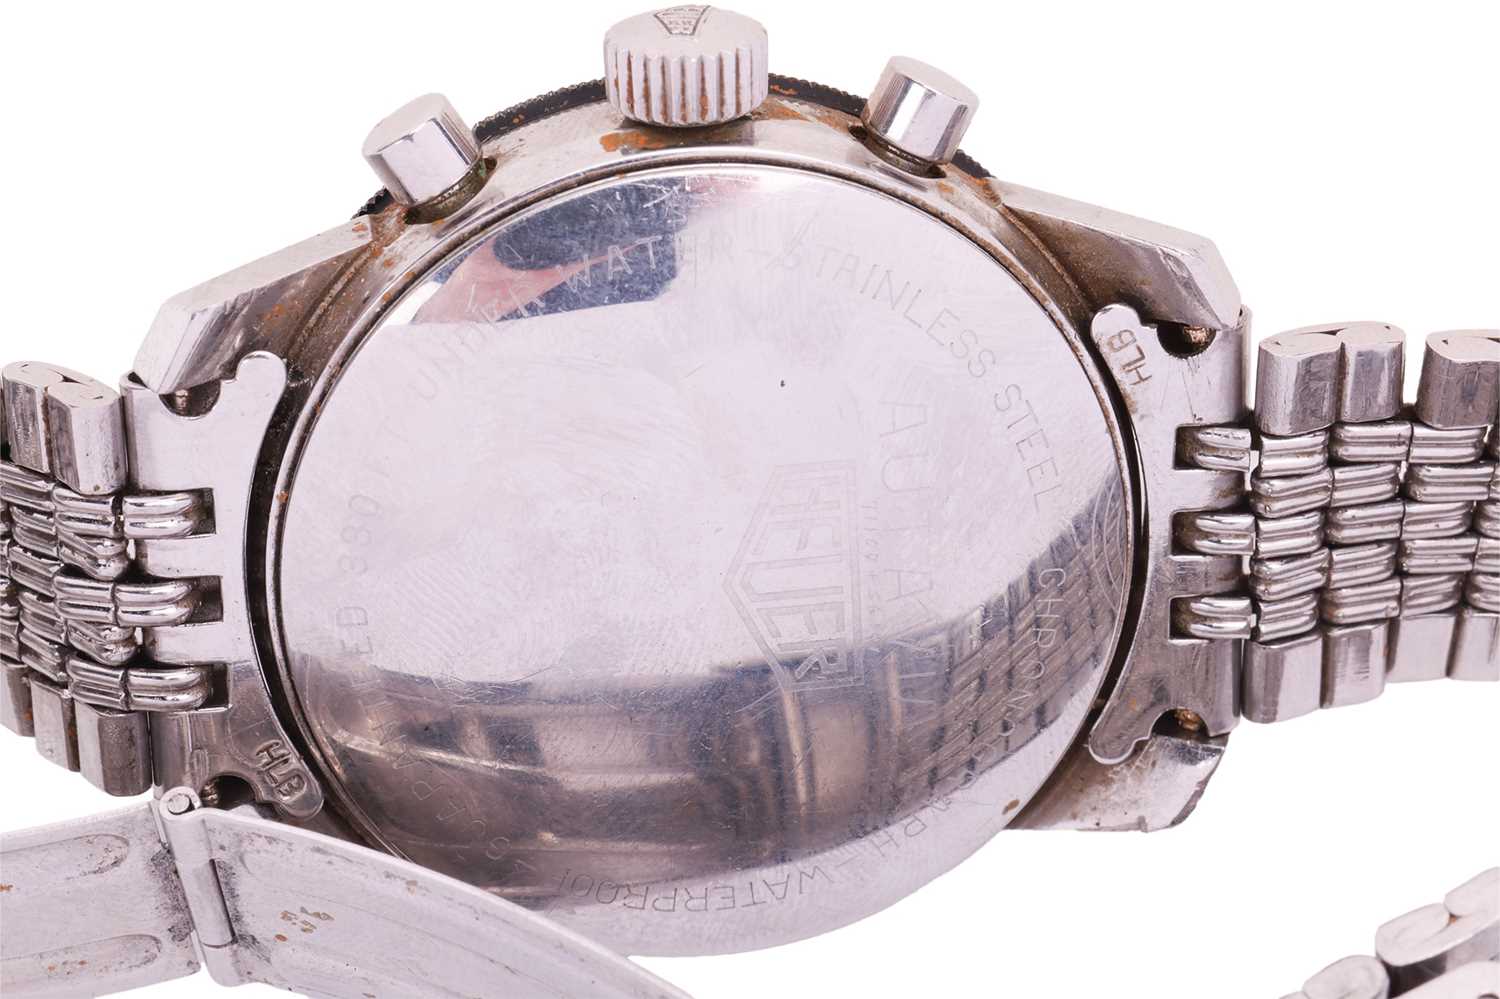 An Heuer Autavia vintage chronohraph Ref 2446 C Model: 2446 C Serial: 130397 Case Material: Steel Ca - Image 5 of 8